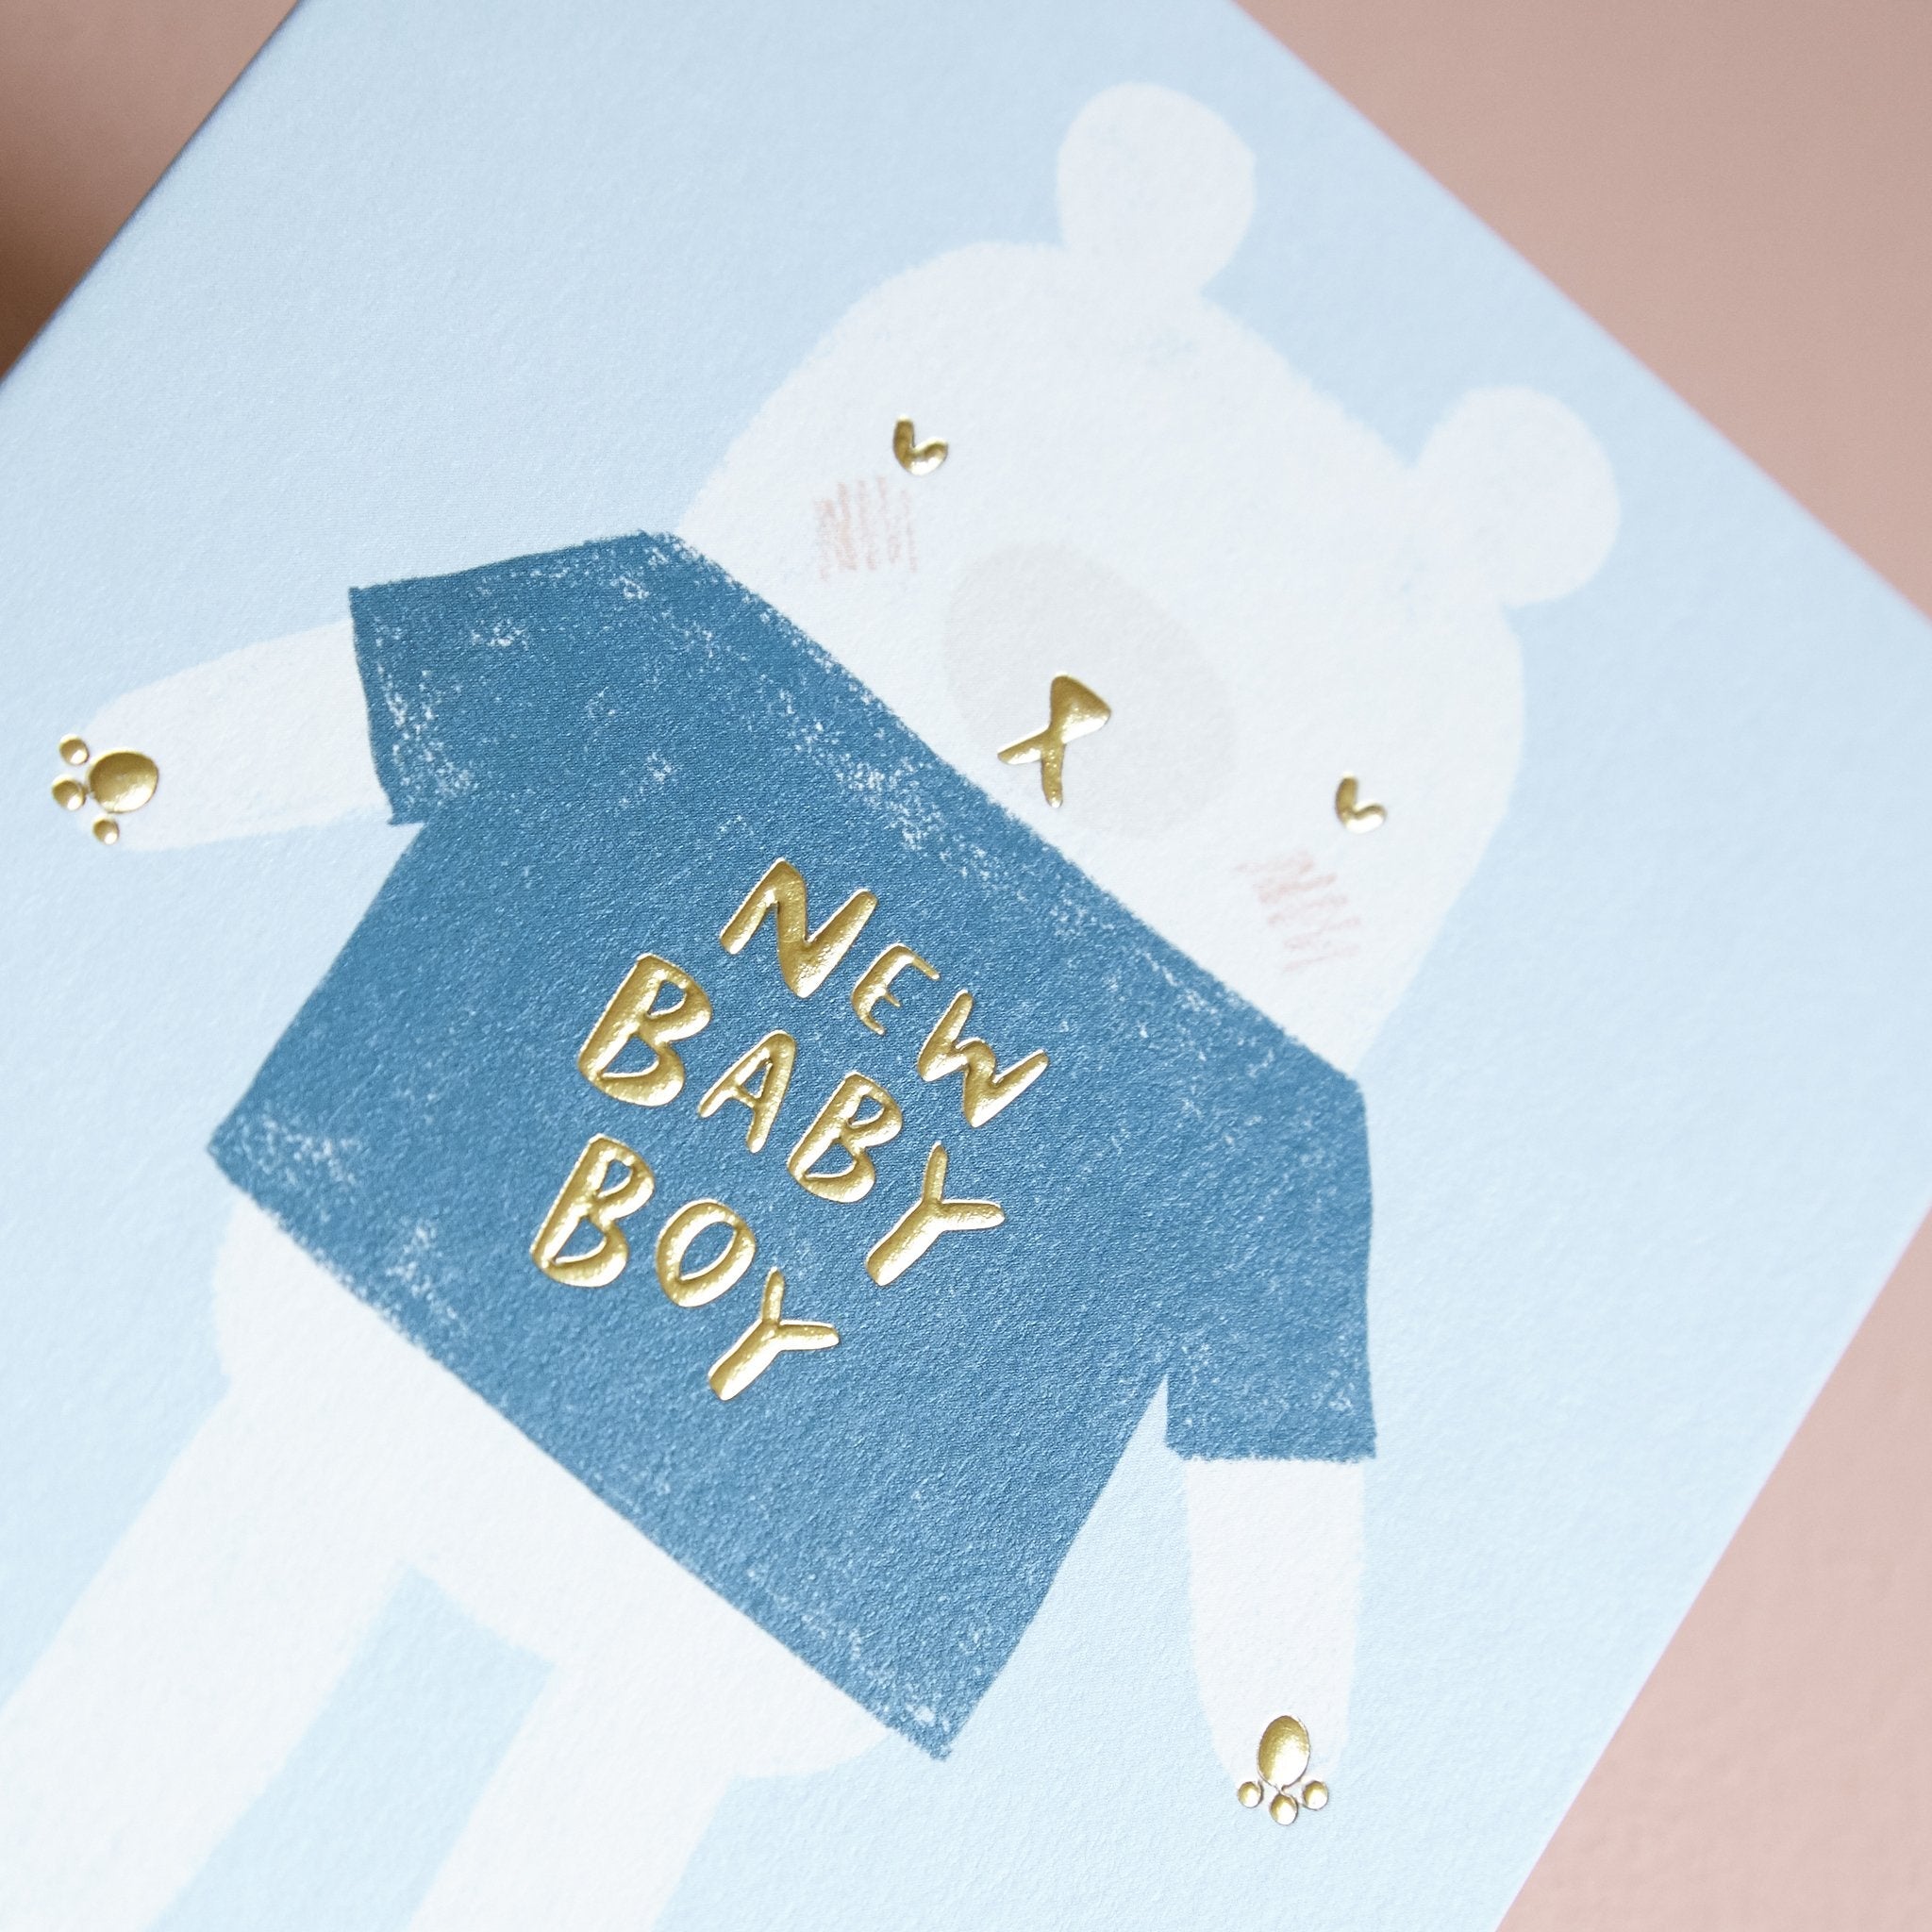 New baby boy Card